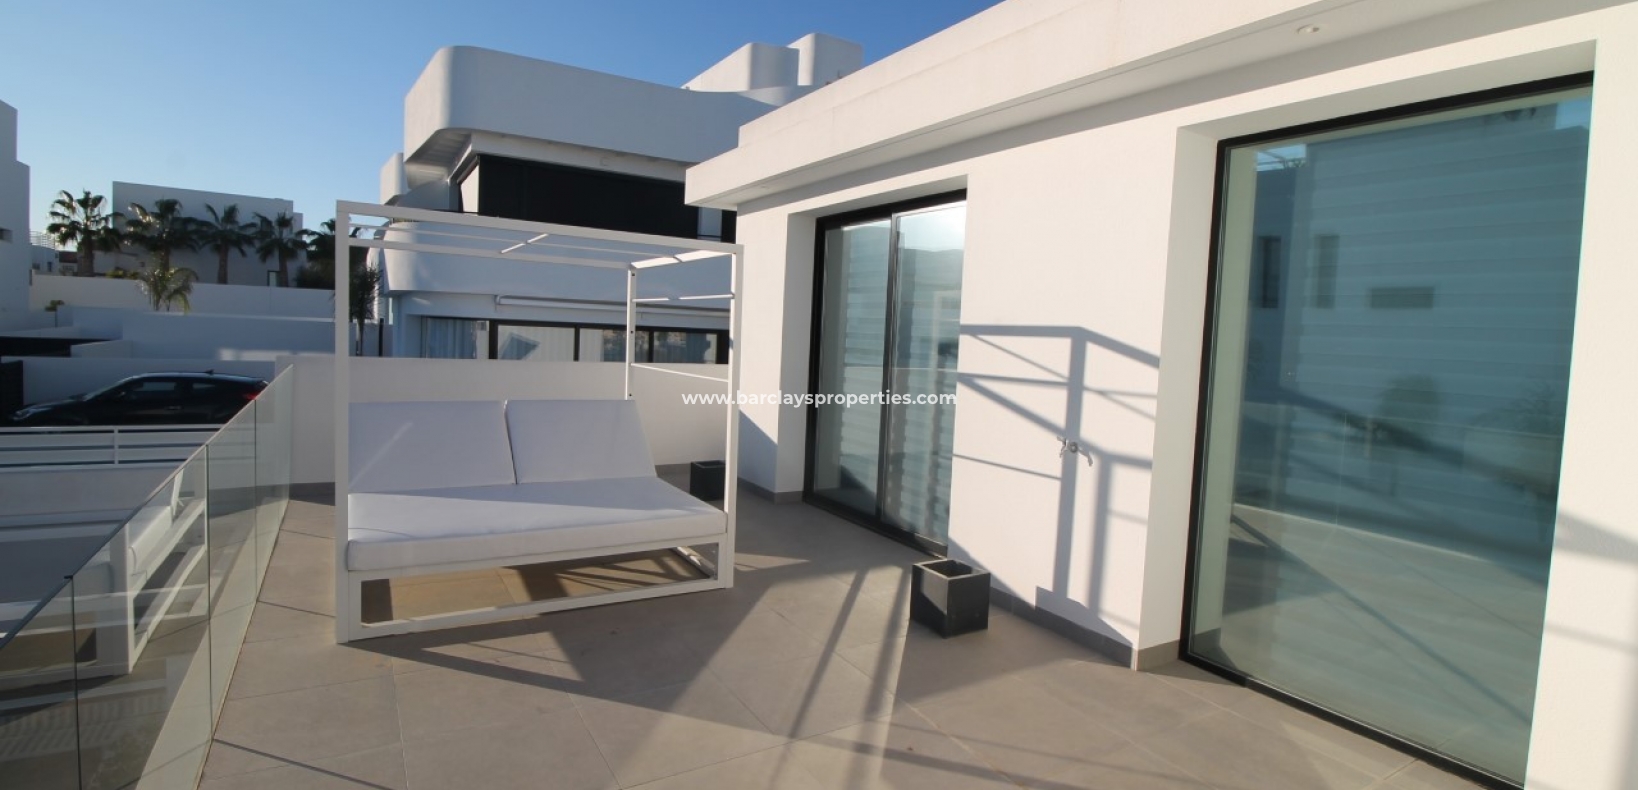 Solarium - Villa moderne à vendre dans l'urbanisation La Marina